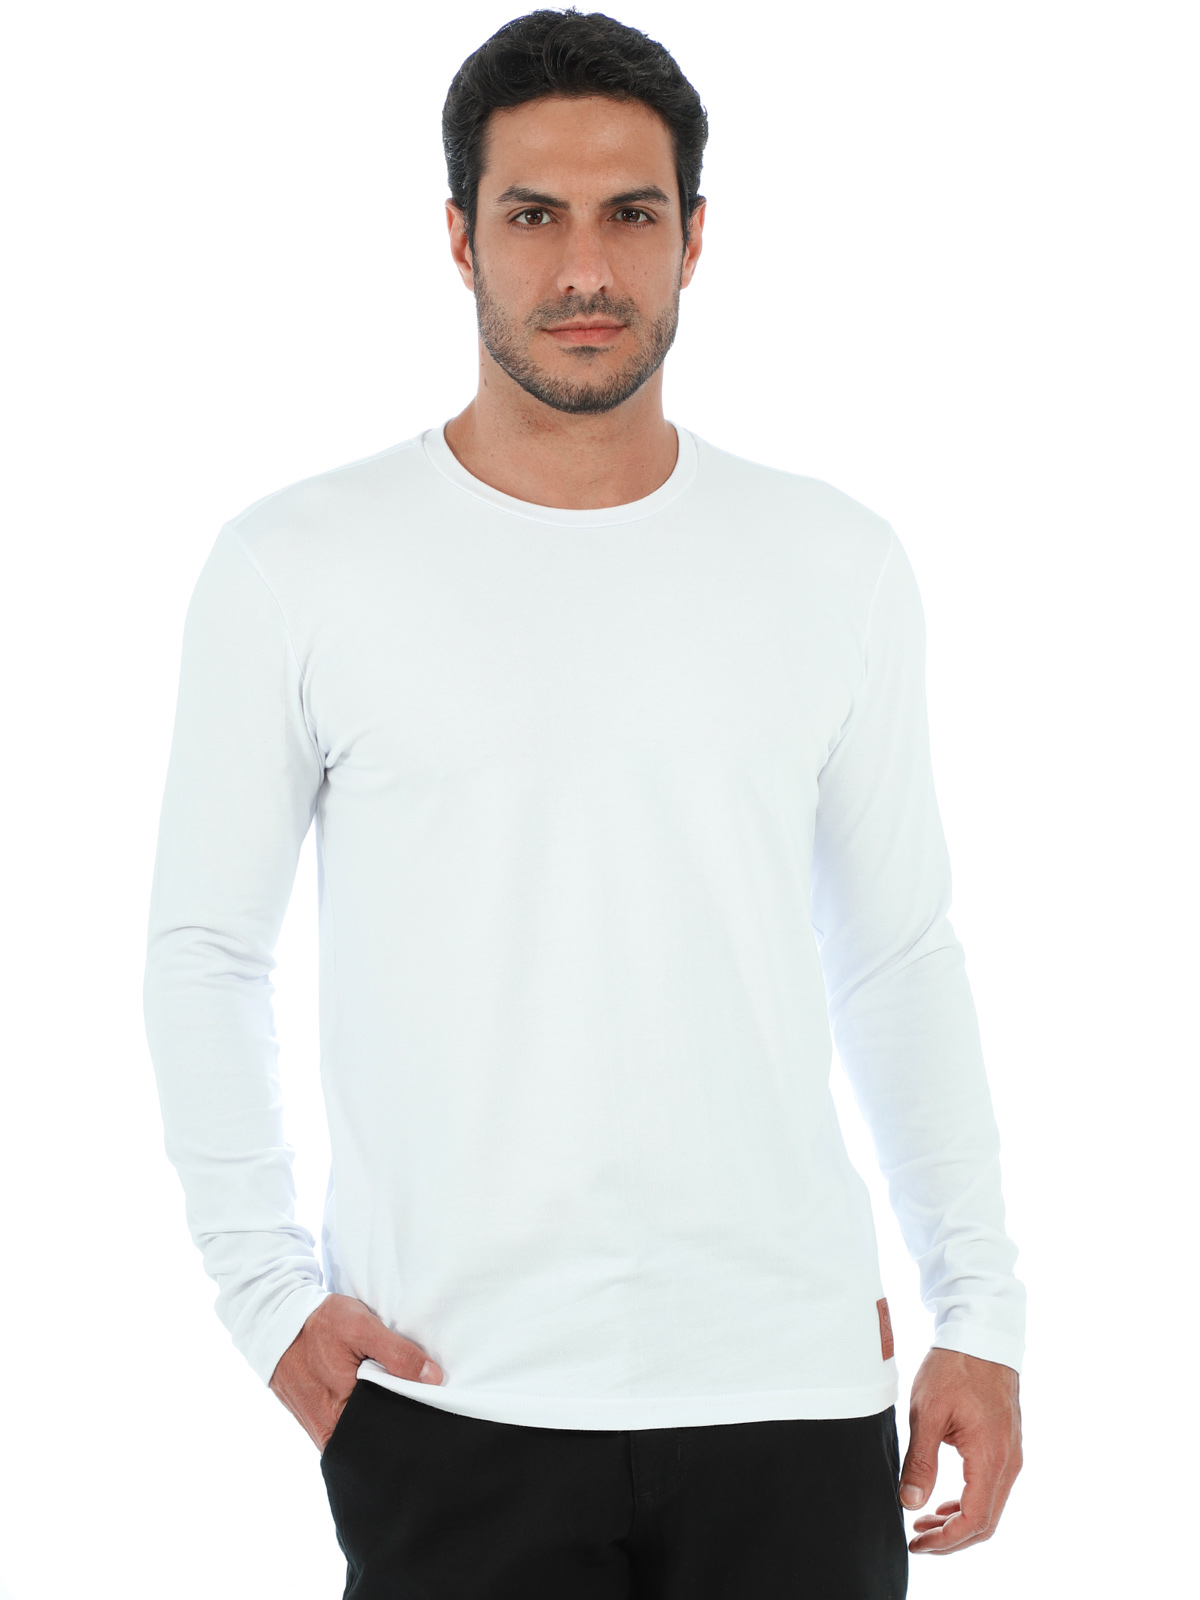 Camiseta Masculina Slim Com Elastano Manga Longa Branca